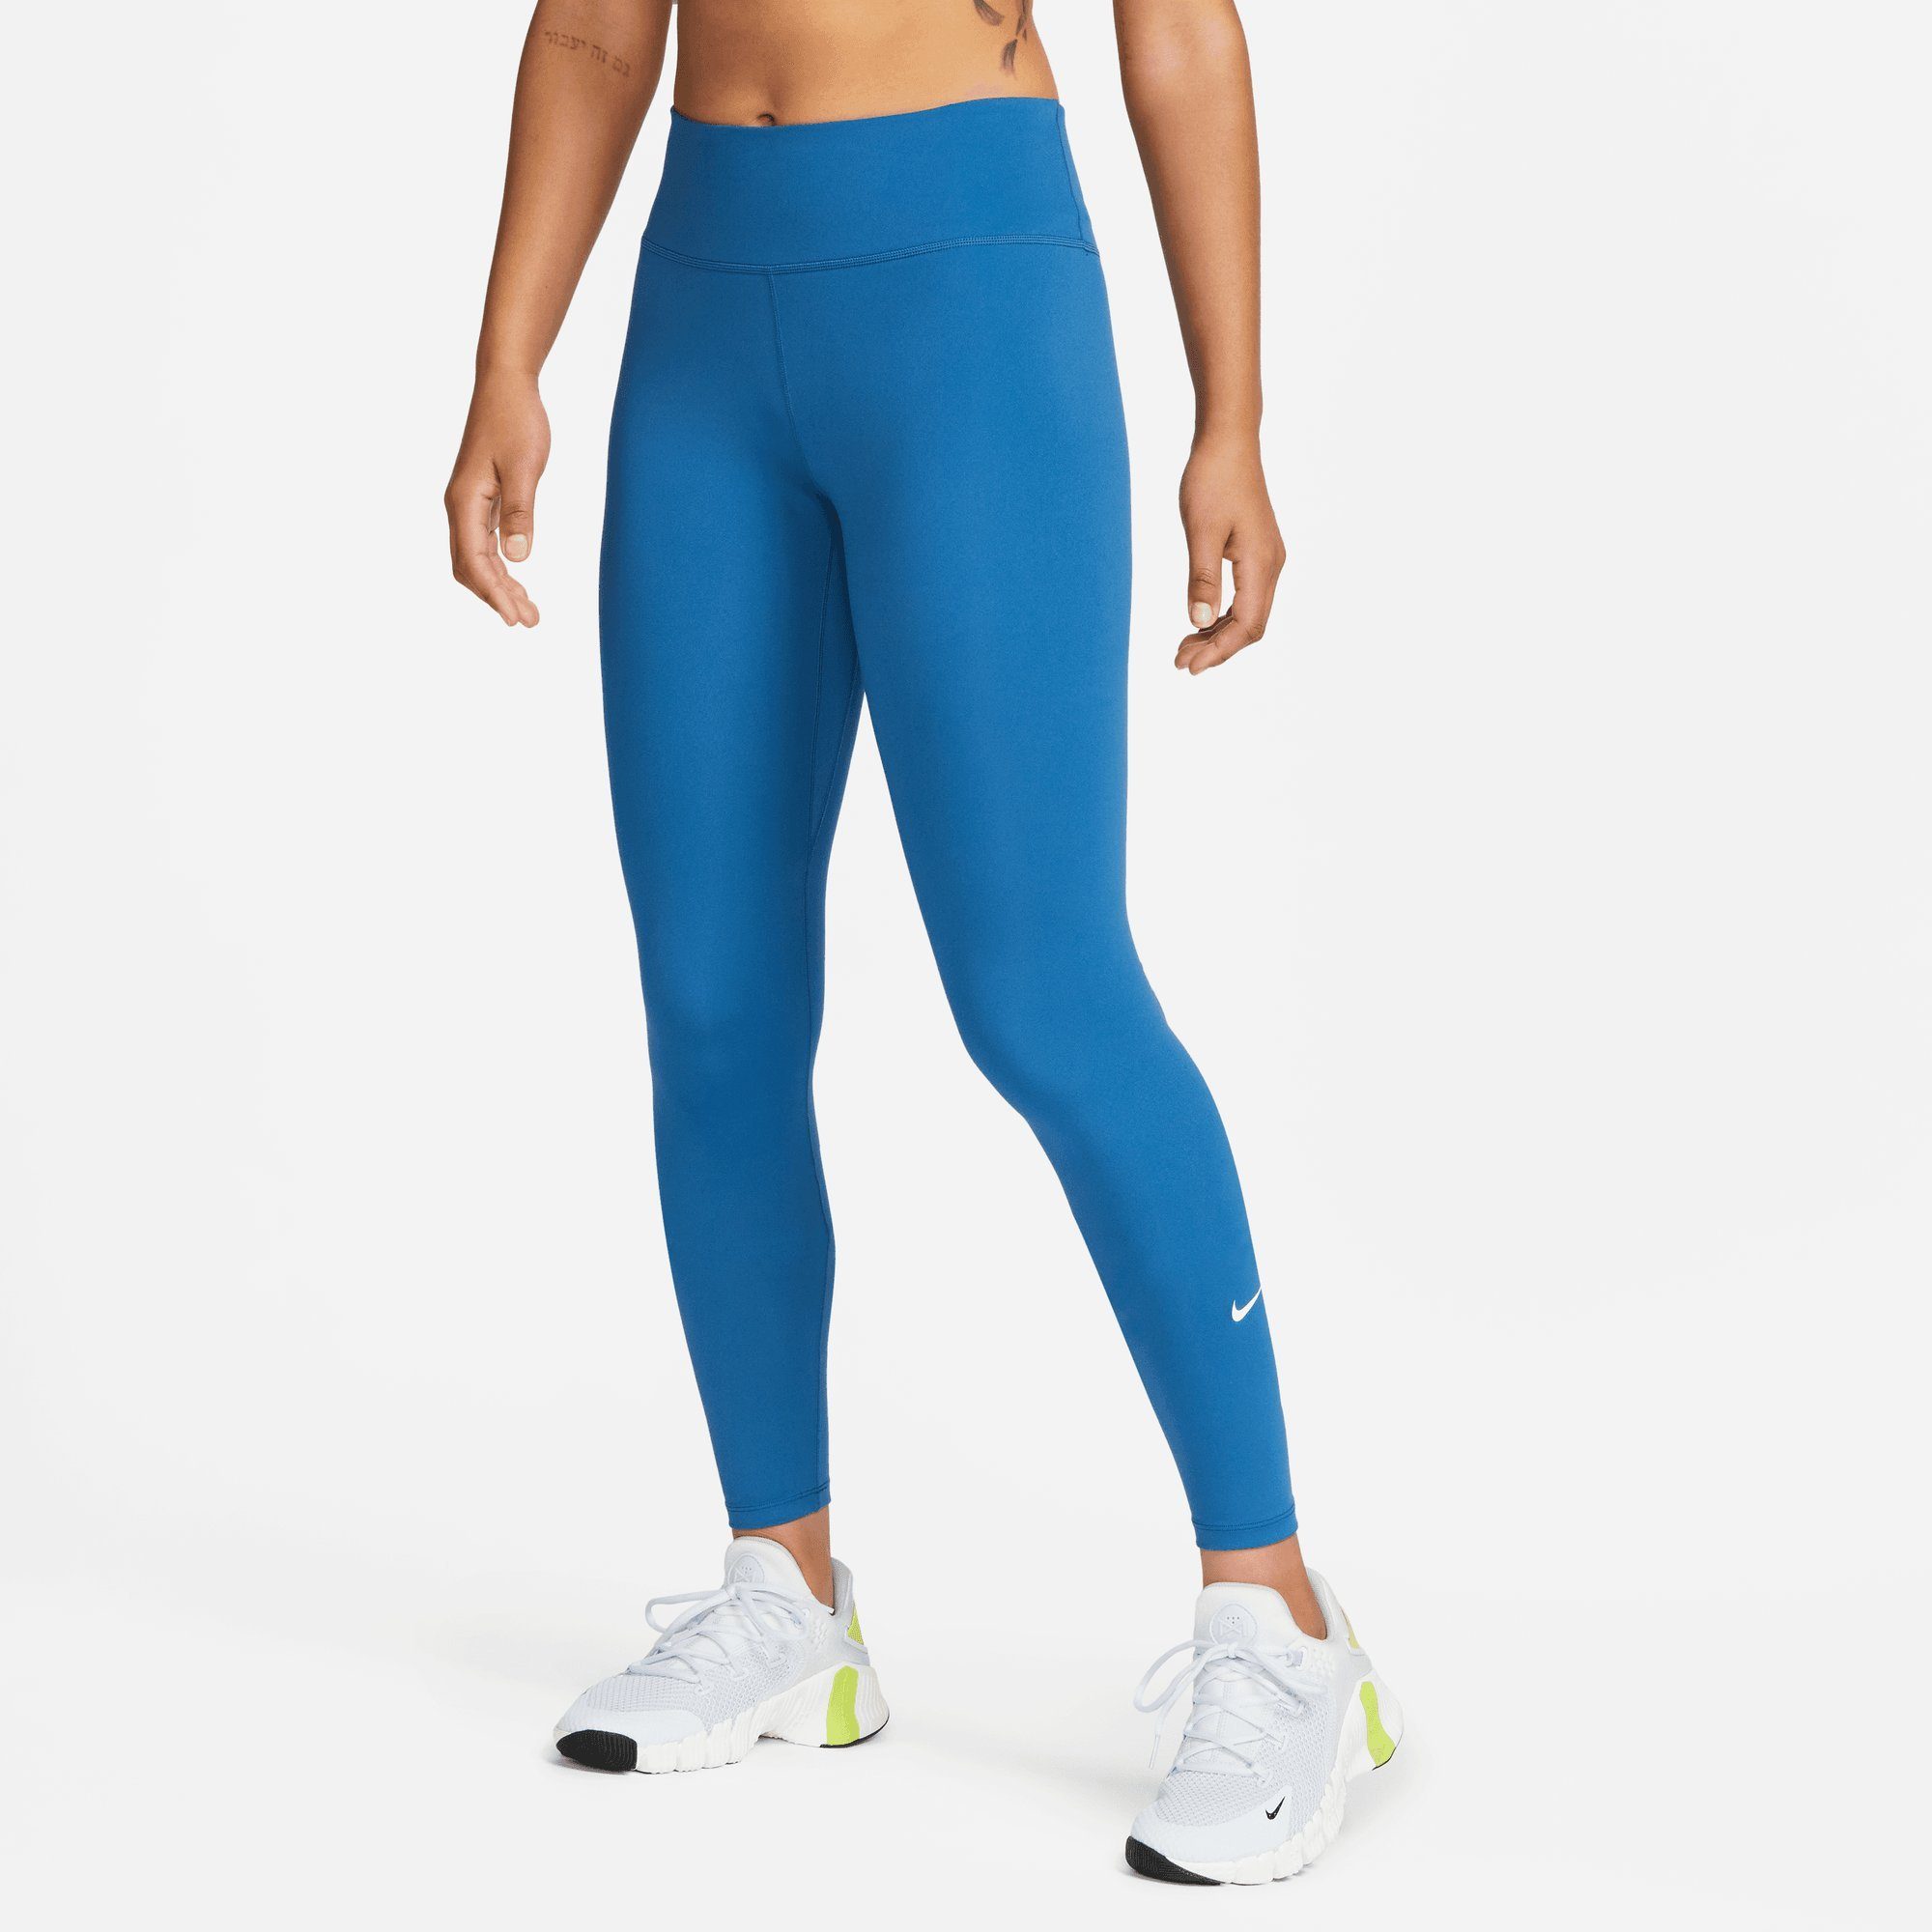 MID-RISE ONE Nike BLUE/WHITE LEGGINGS Trainingstights INDUSTRIAL WOMEN'S